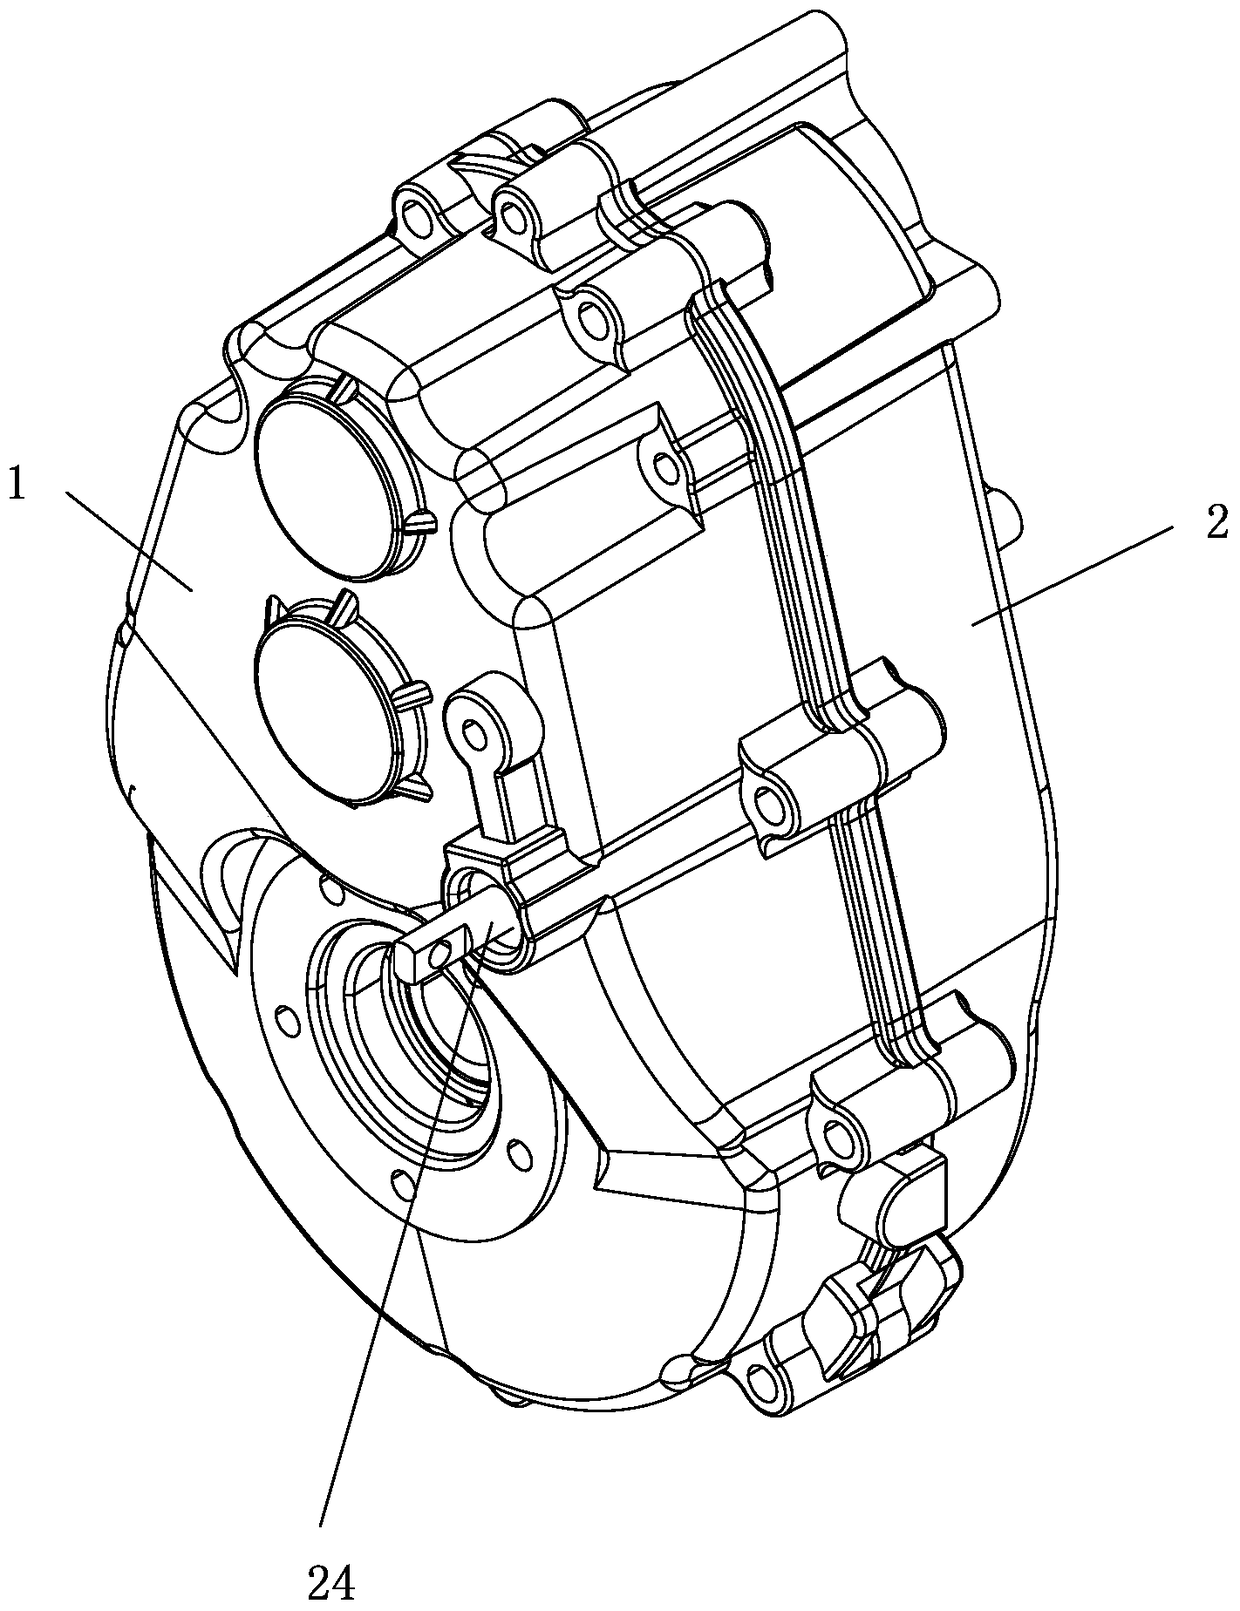 A three-speed gearbox